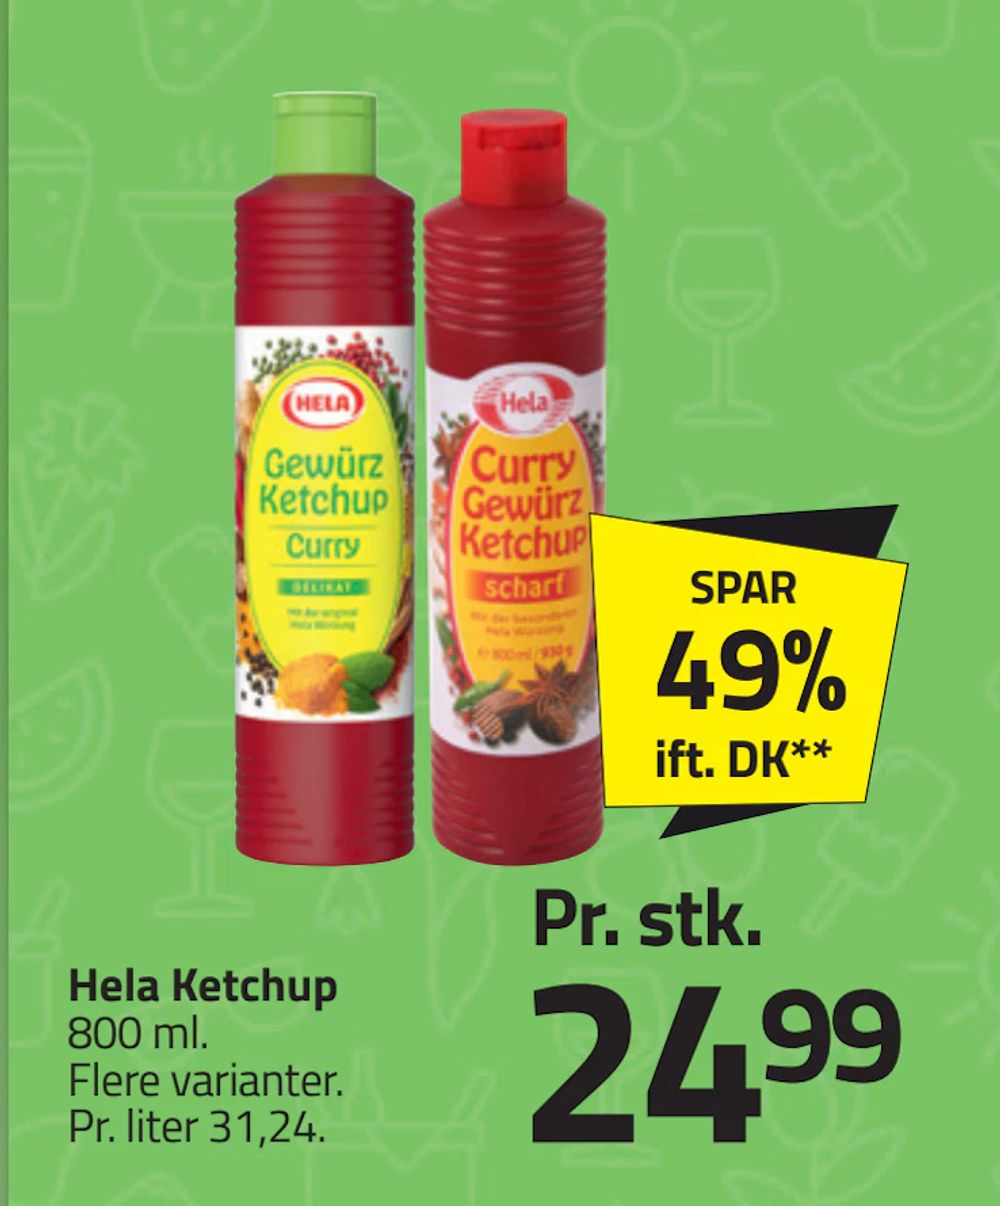 Tilbud på Hela Ketchup fra Fleggaard til 24,99 kr.